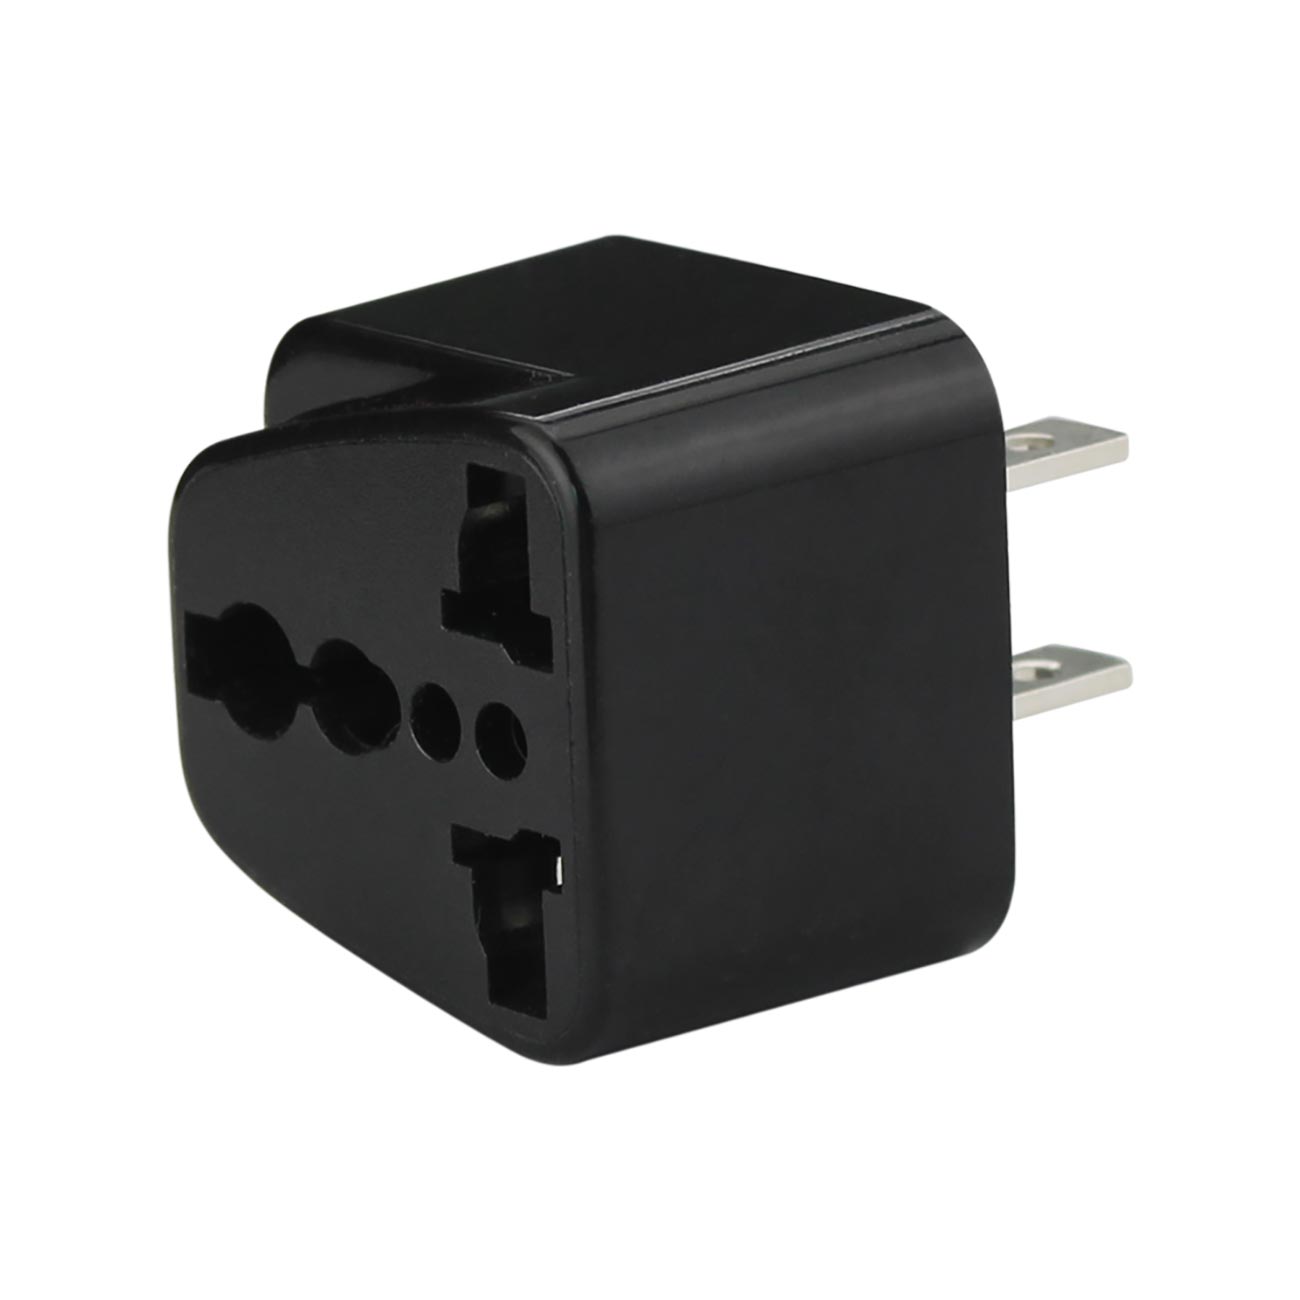 Universal Europe Eu / Uk / Au To Us Travel Plug Power Adapter Converter In Black